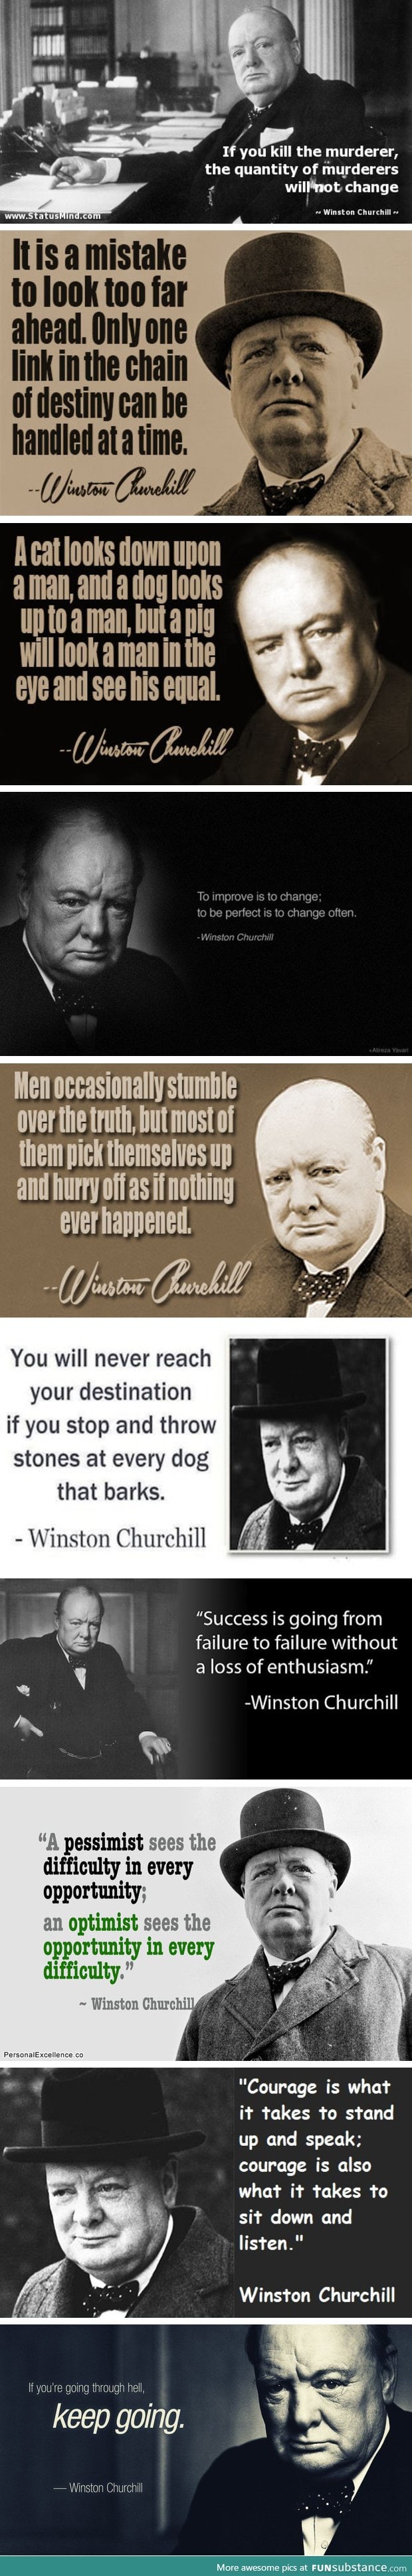 Sir Winston Churchill was a wise man